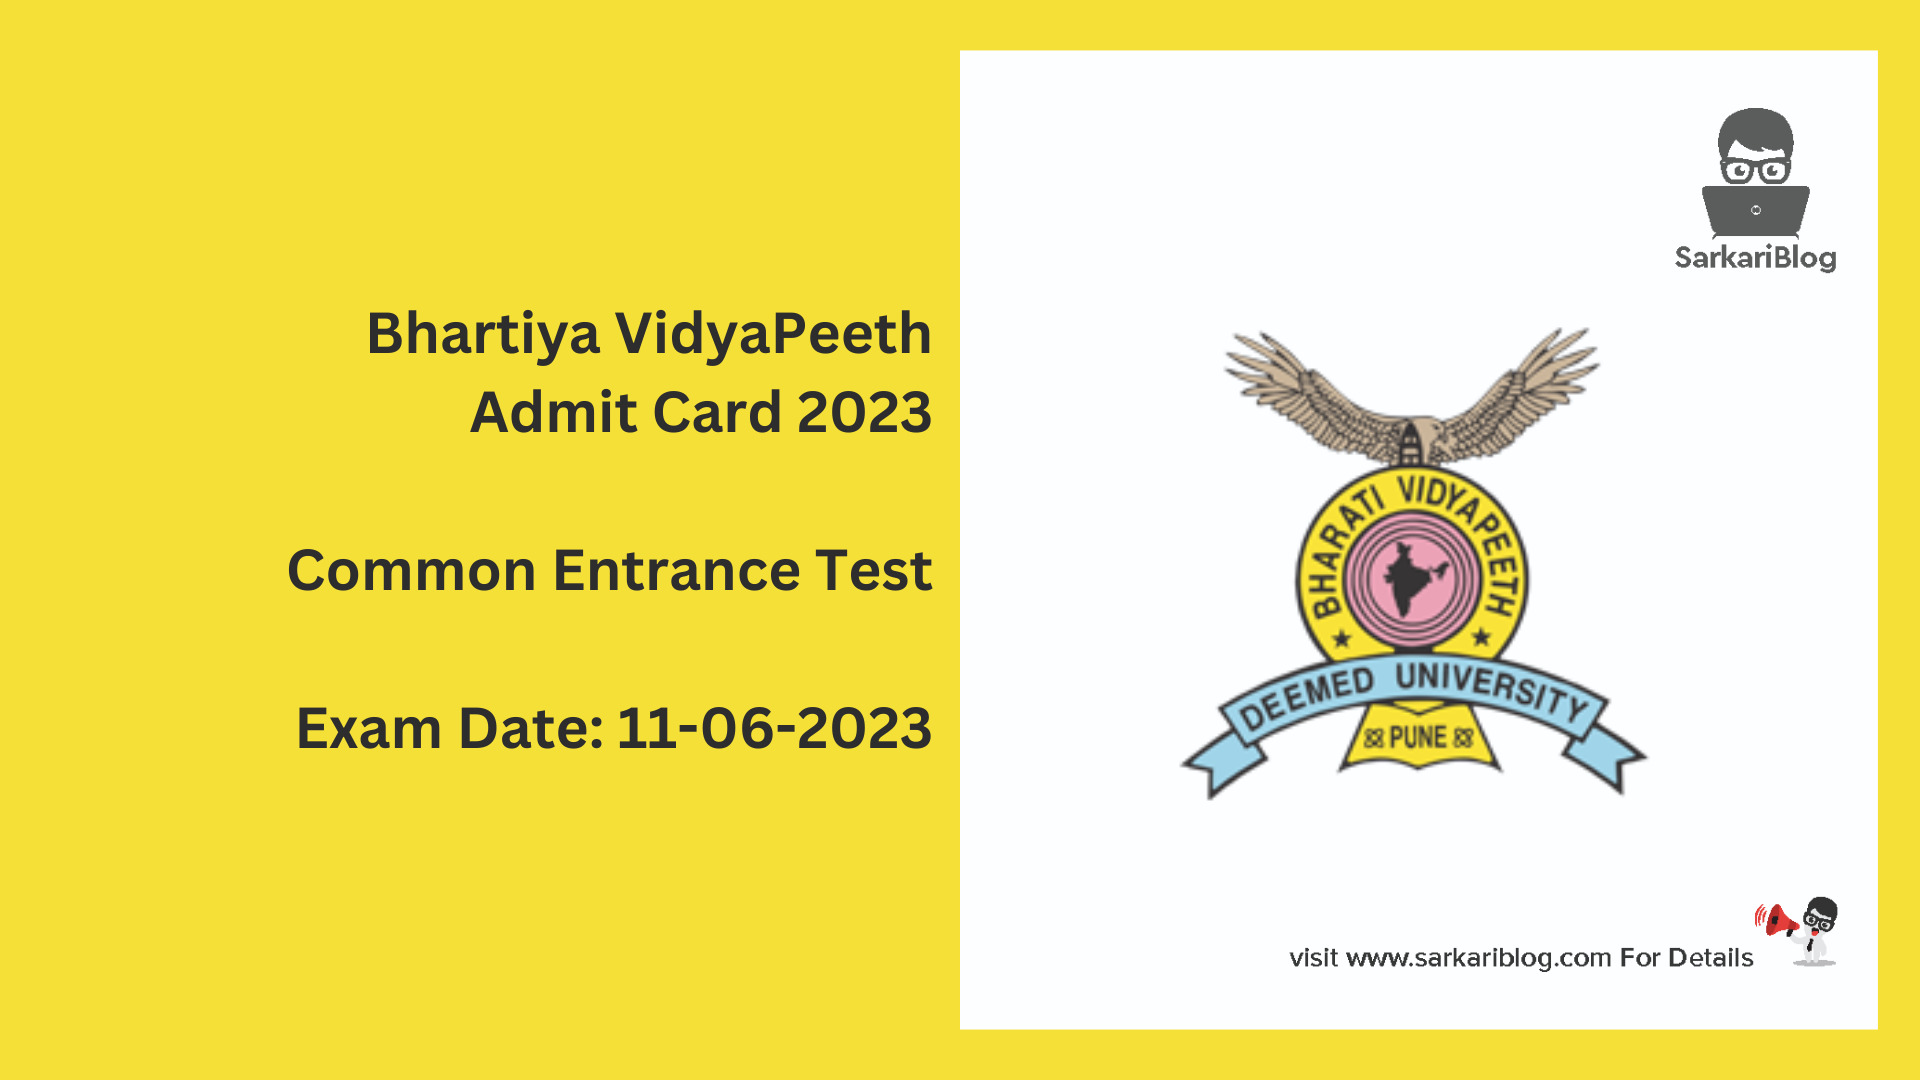 Bhartiya VidyaPeeth Admit Card 2023